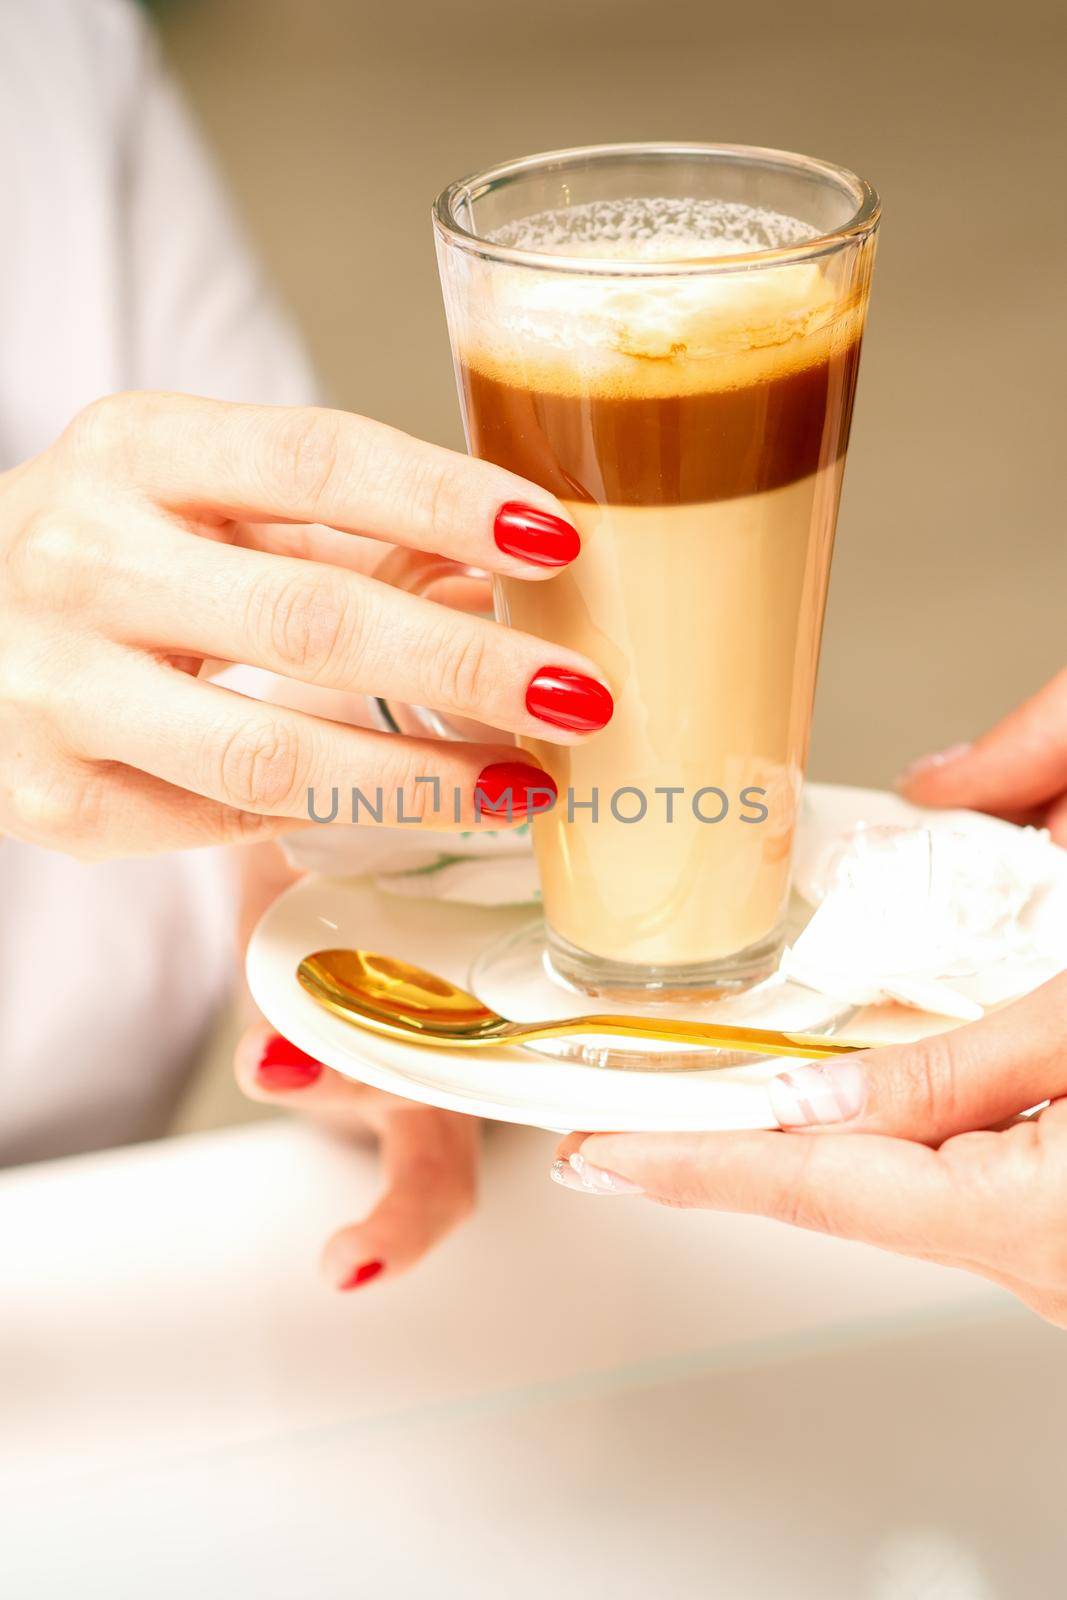 Barista serving coffee latte in glass mug for a customer, close up hands. by okskukuruza